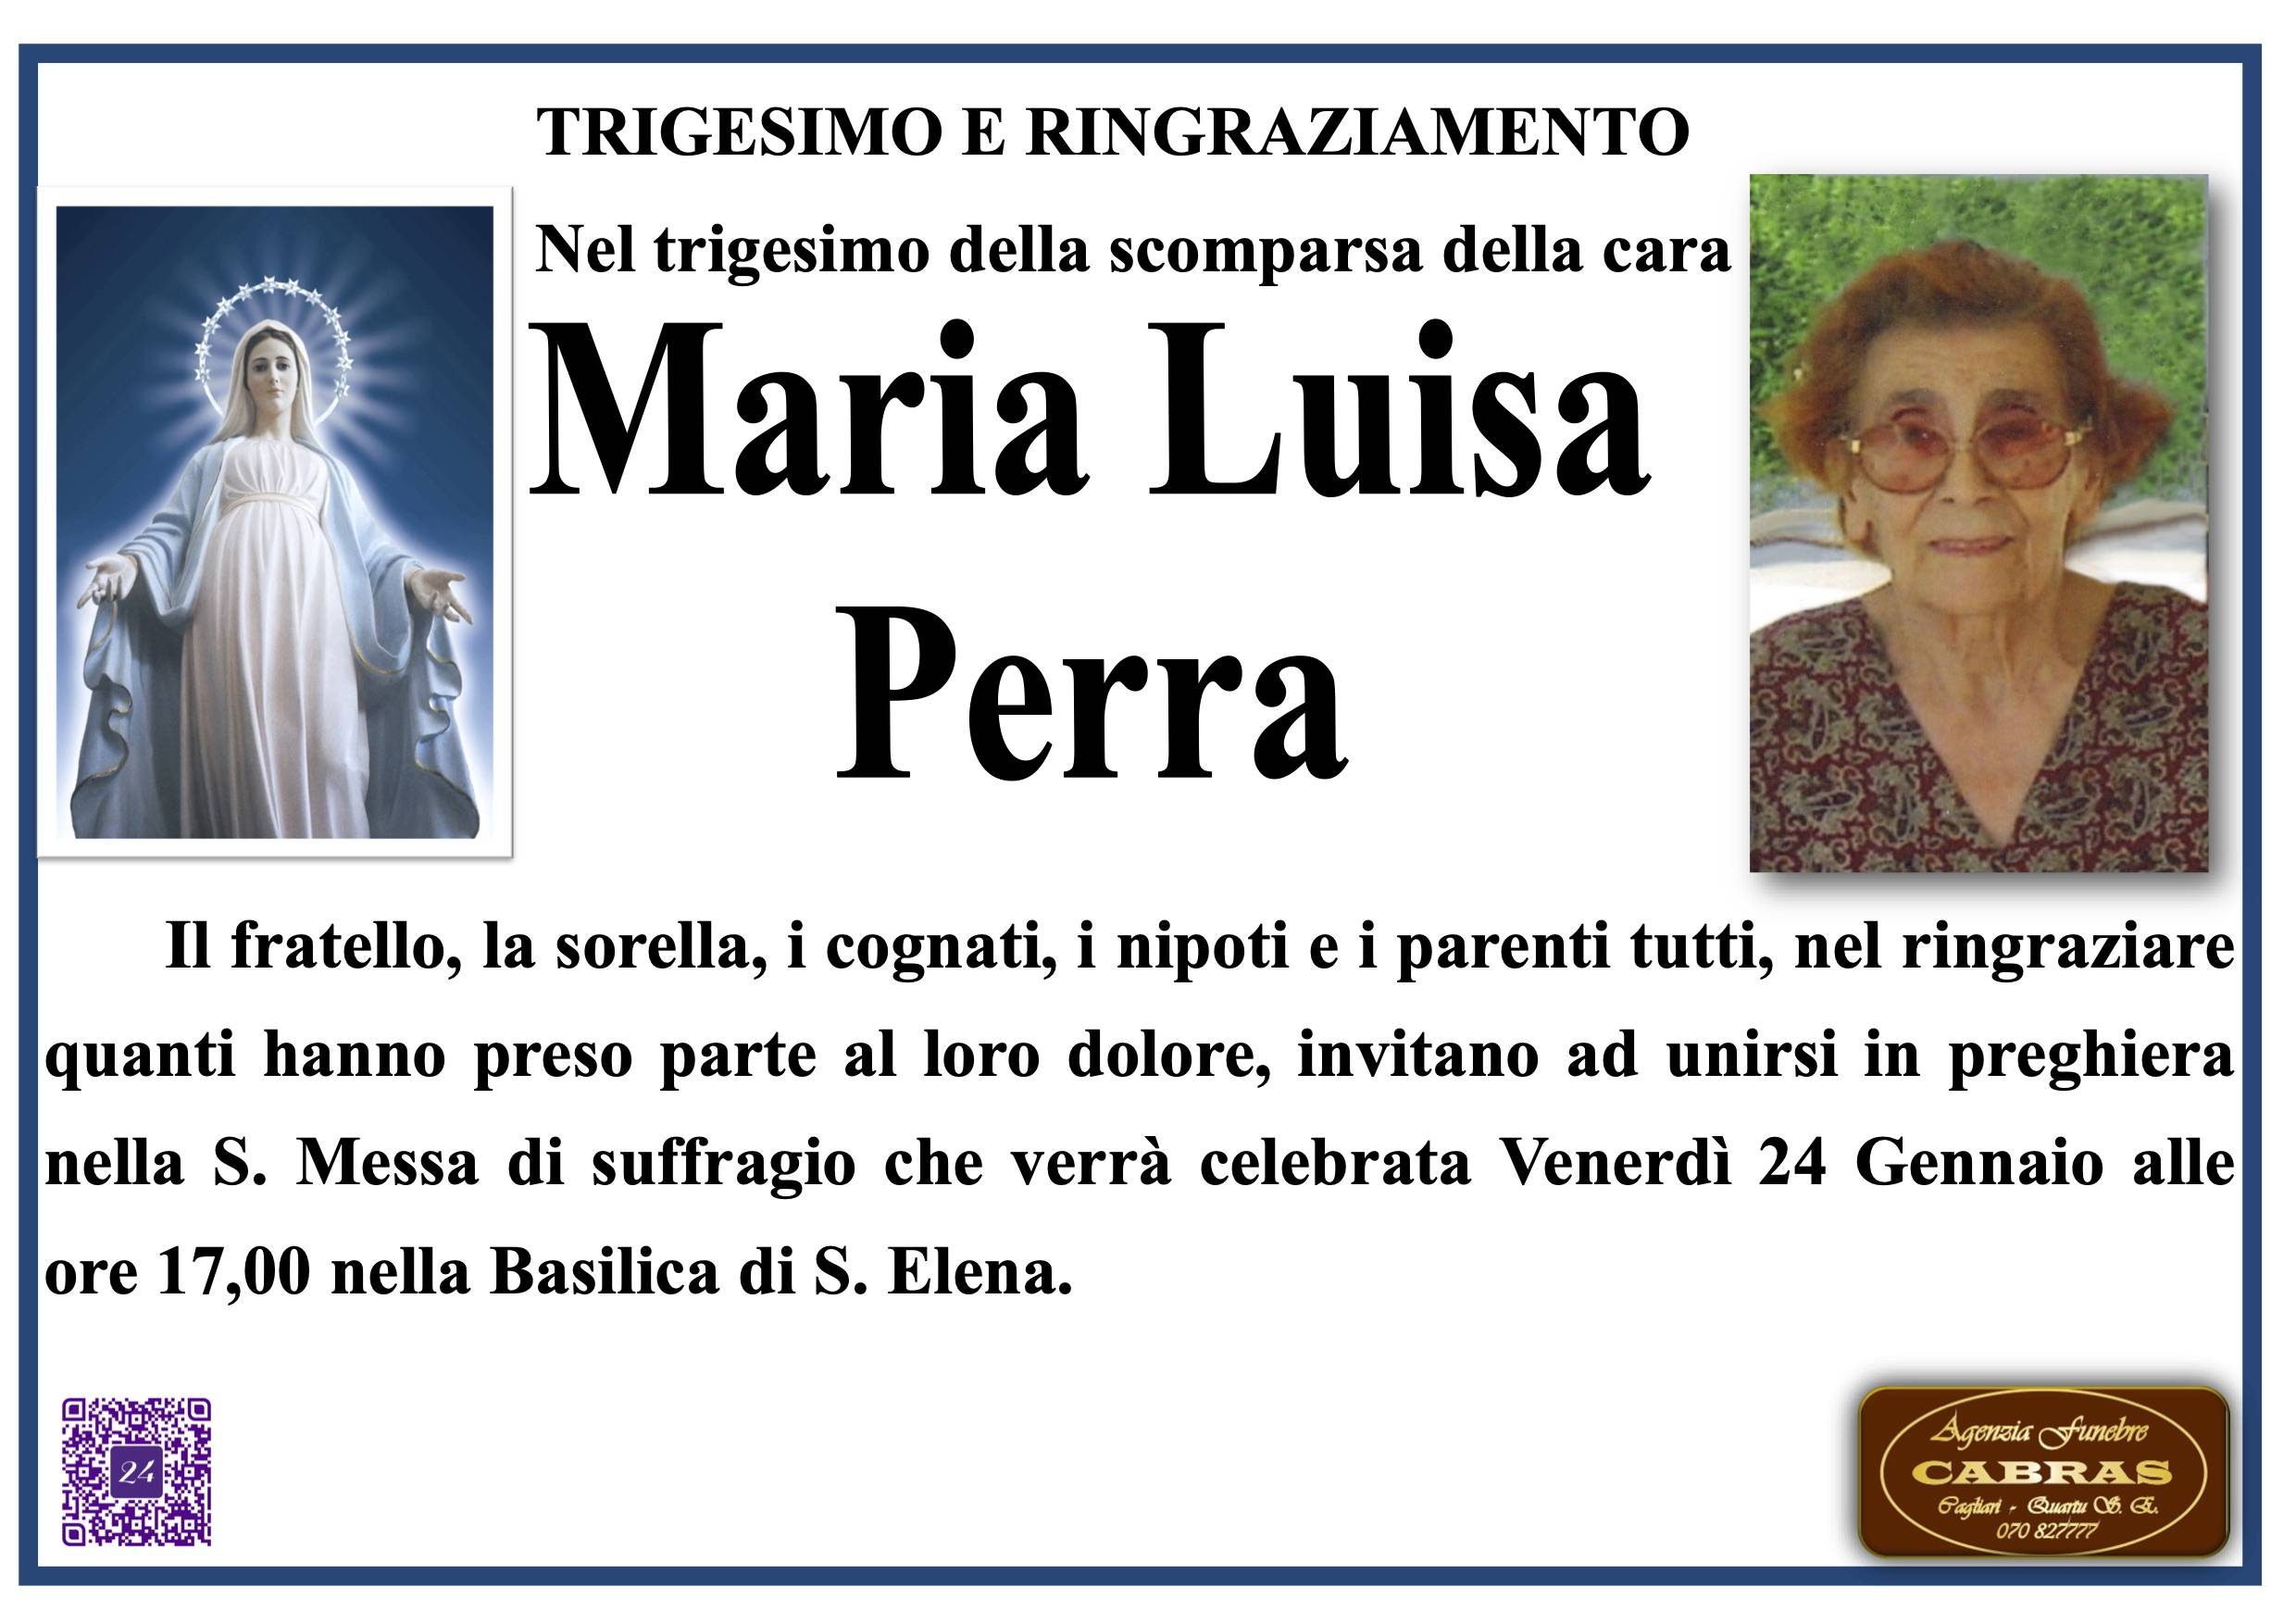 Maria Luisa Perra